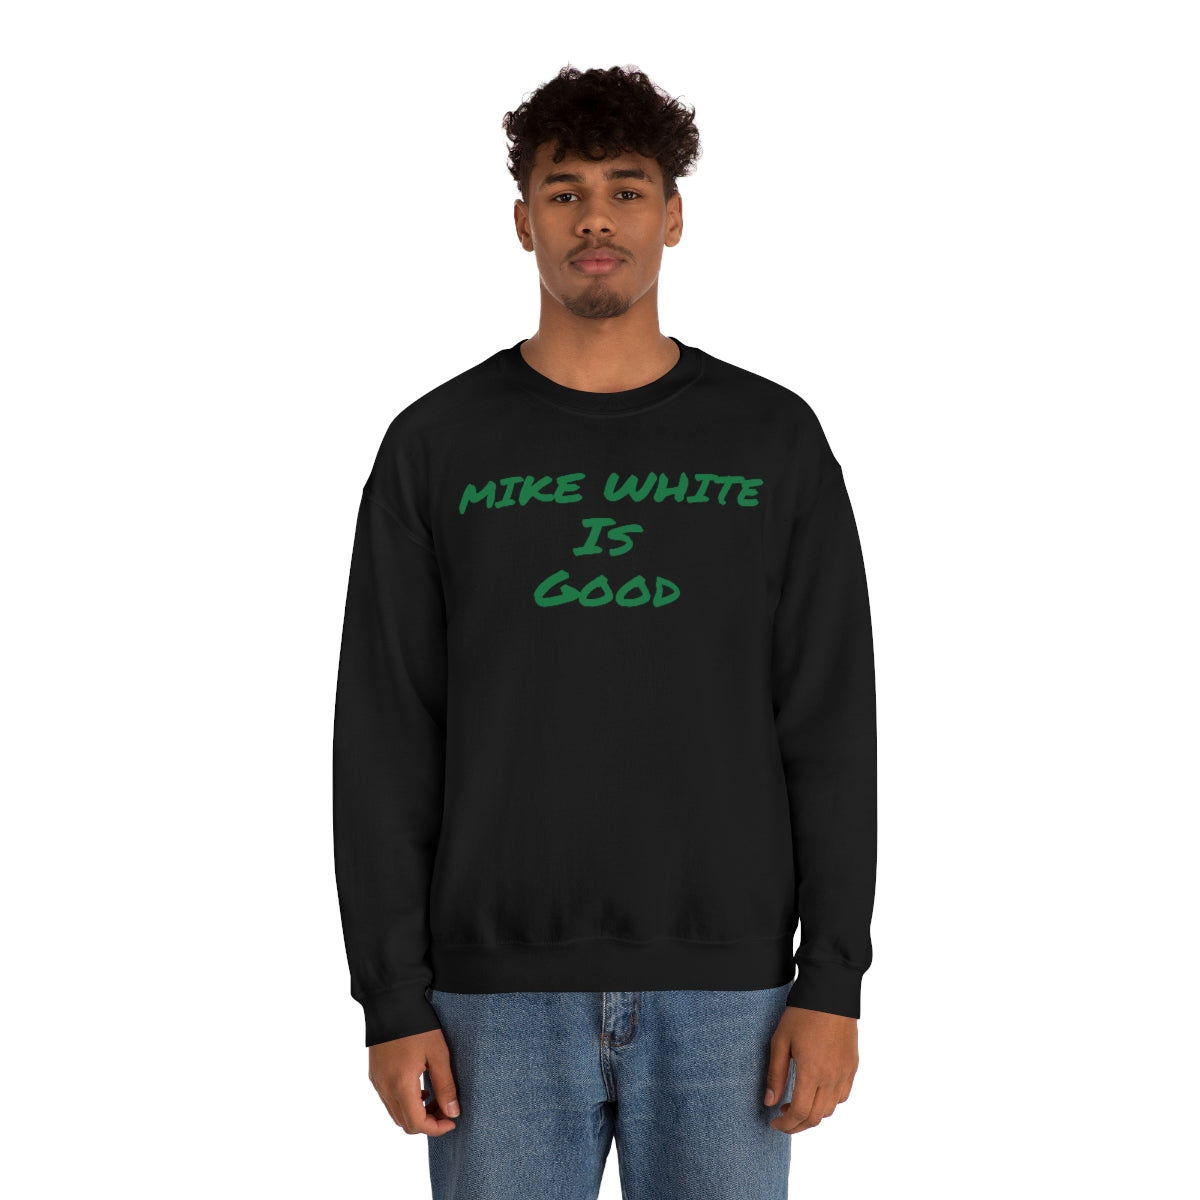 Mike White Is Good Crewneck Sweatshirt - IsGoodBrand